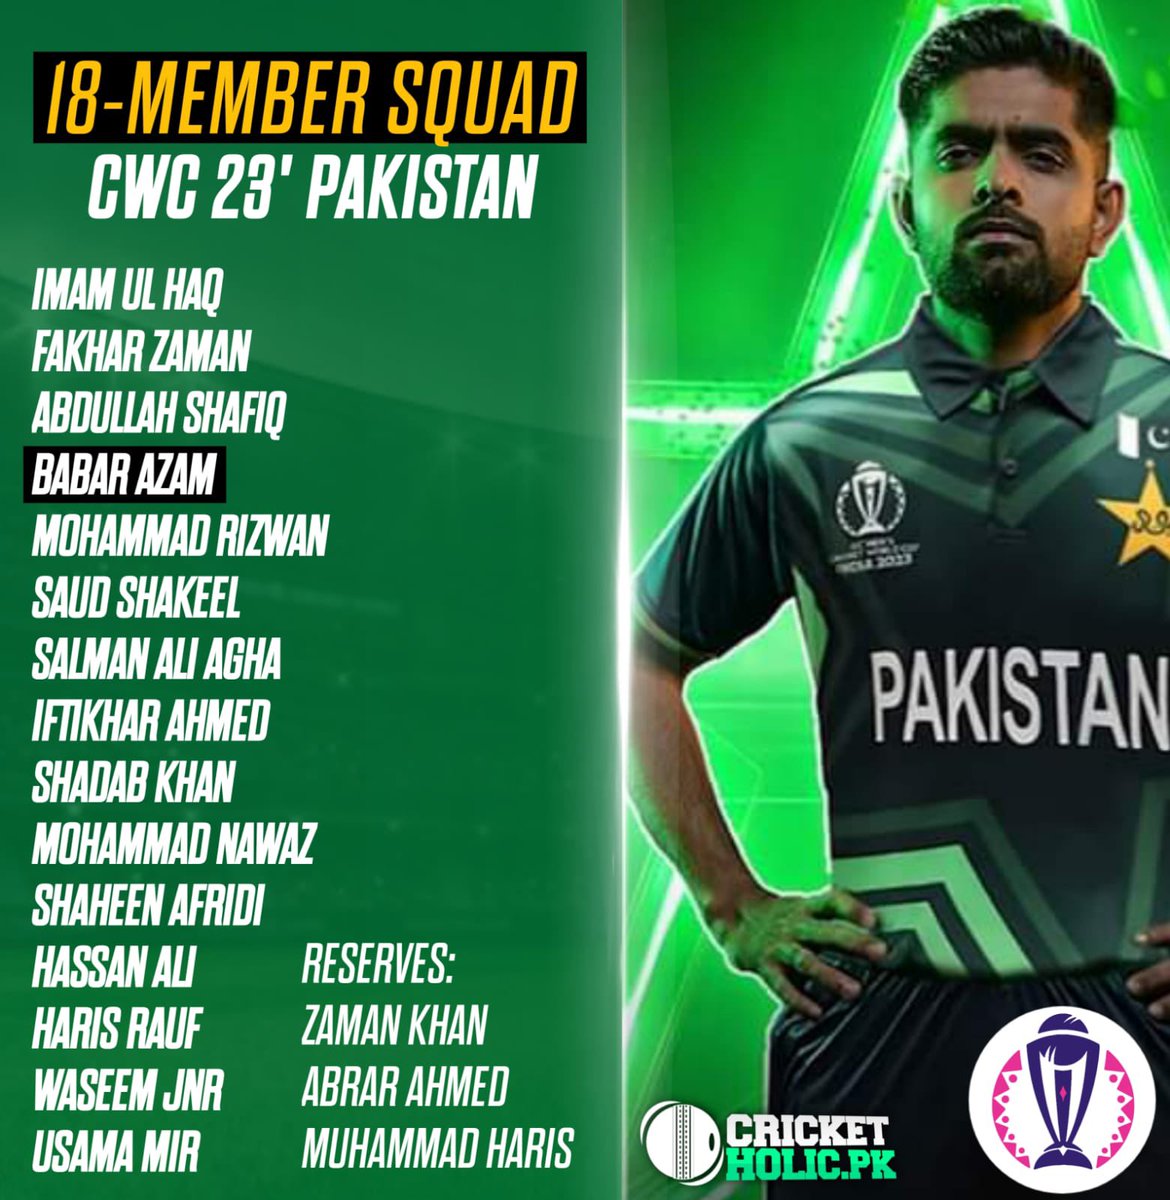 Good luck team Pakistan 🇵🇰🤲💪